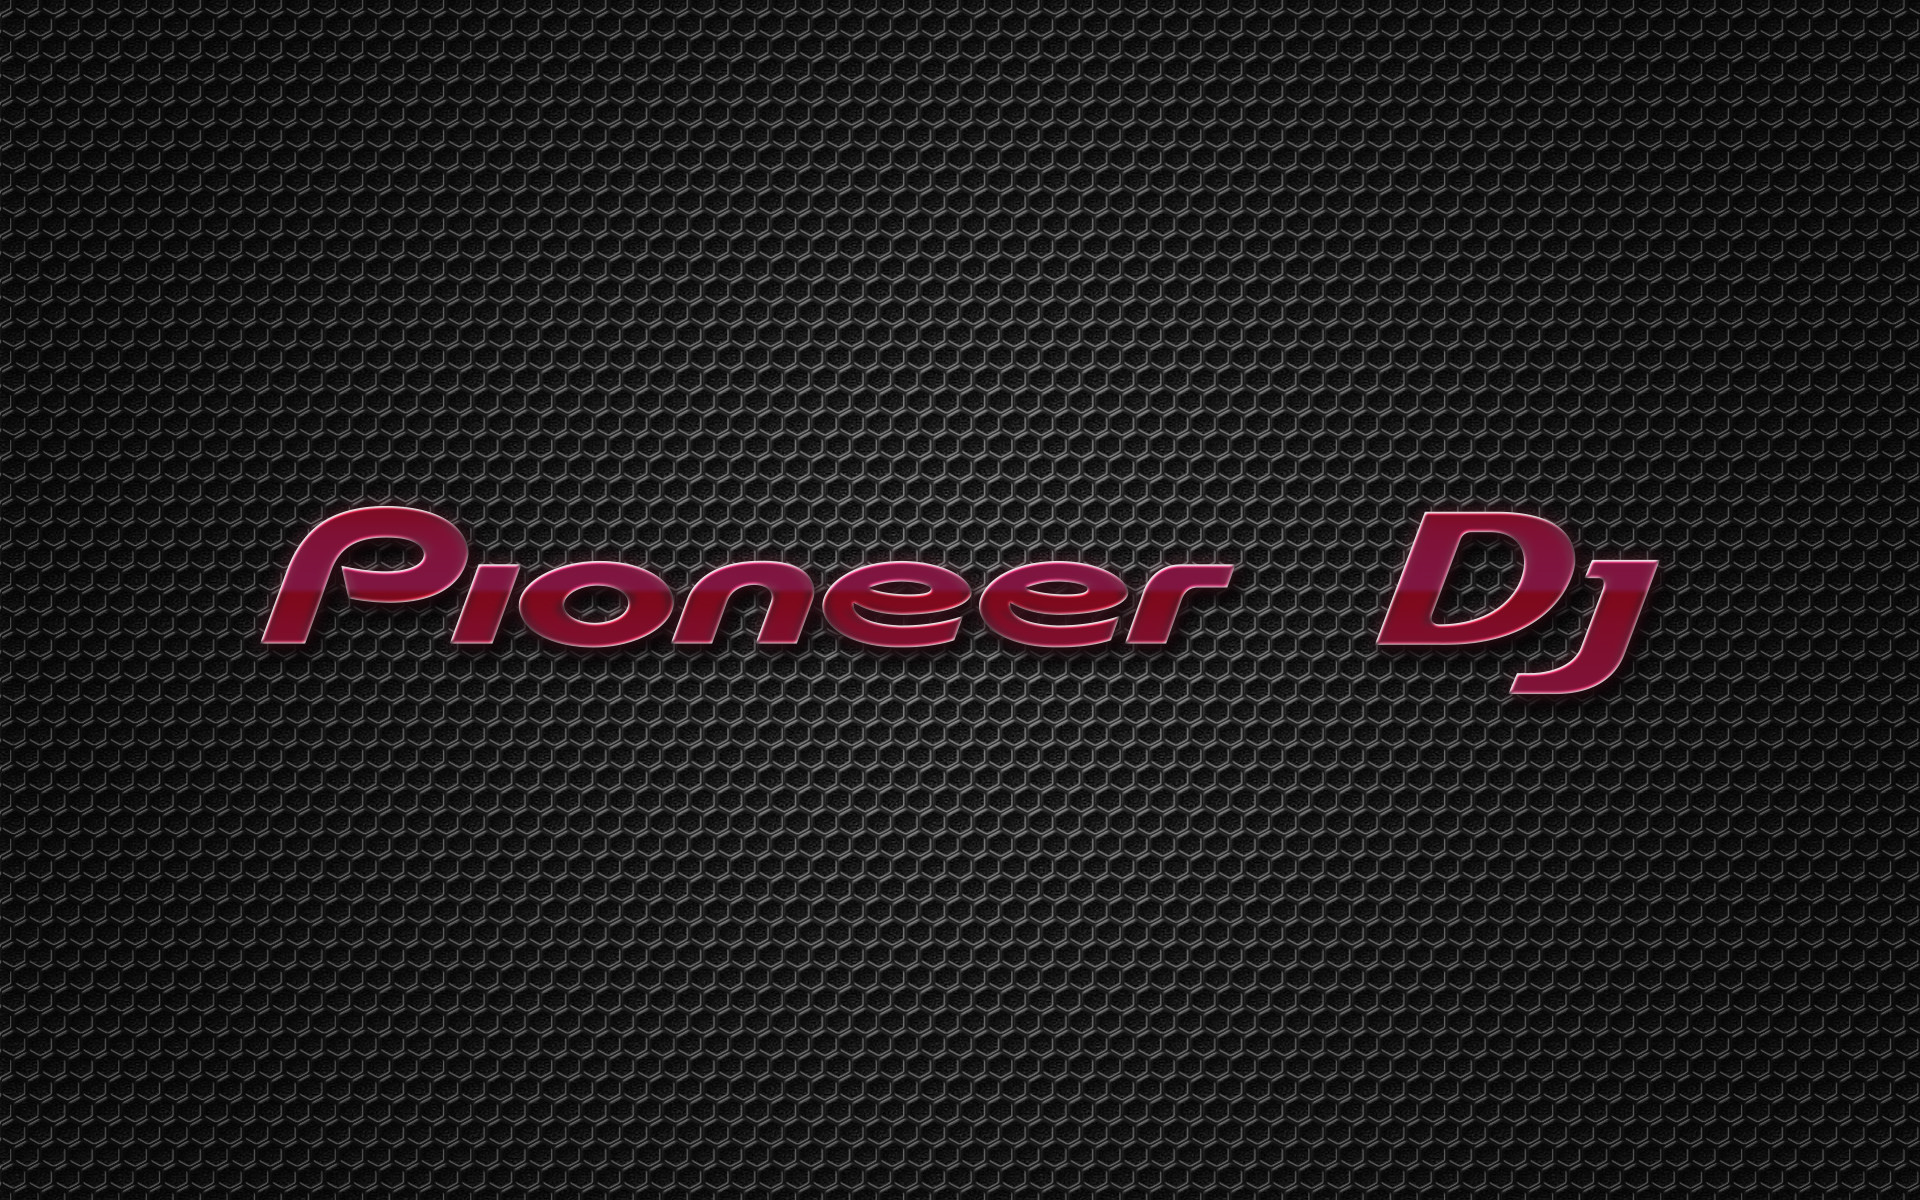 Логотип на заставку магнитолы. Обои для автомагнитолы. Пионер логотип. Pioneer DJ обои. Pioneer надпись.